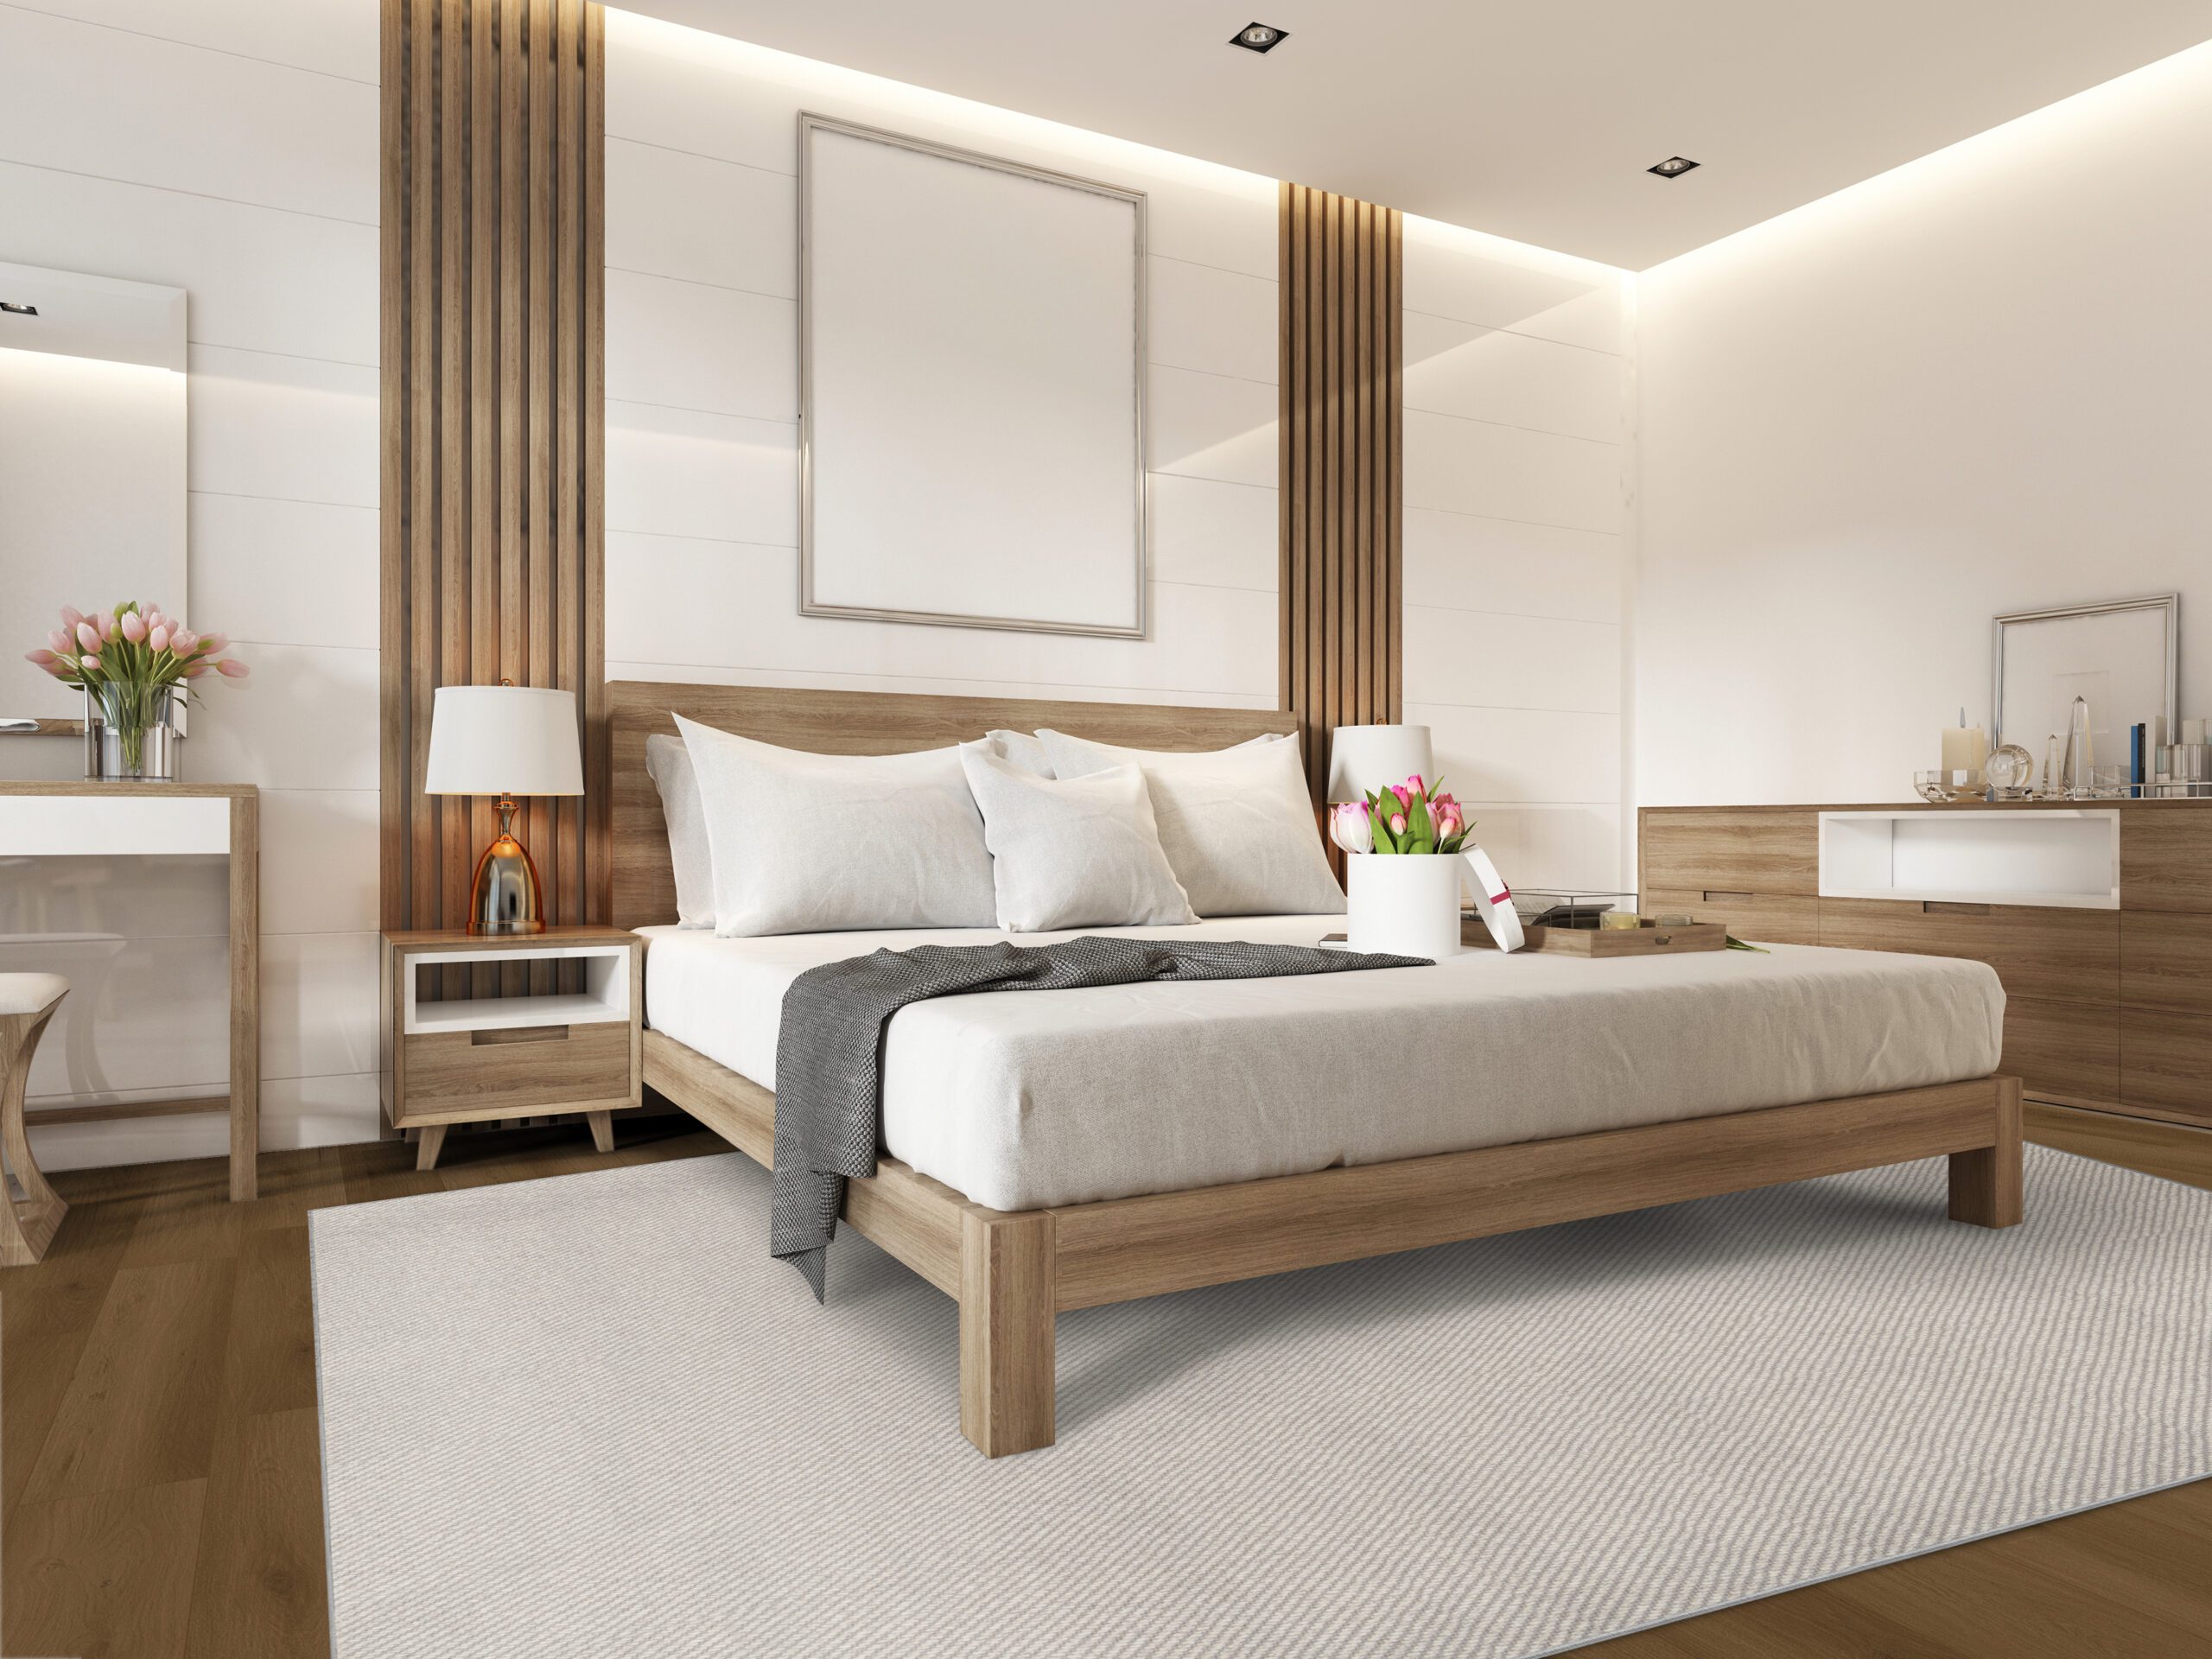 Modern light bedroom with wooden furniture in Scandinavian style